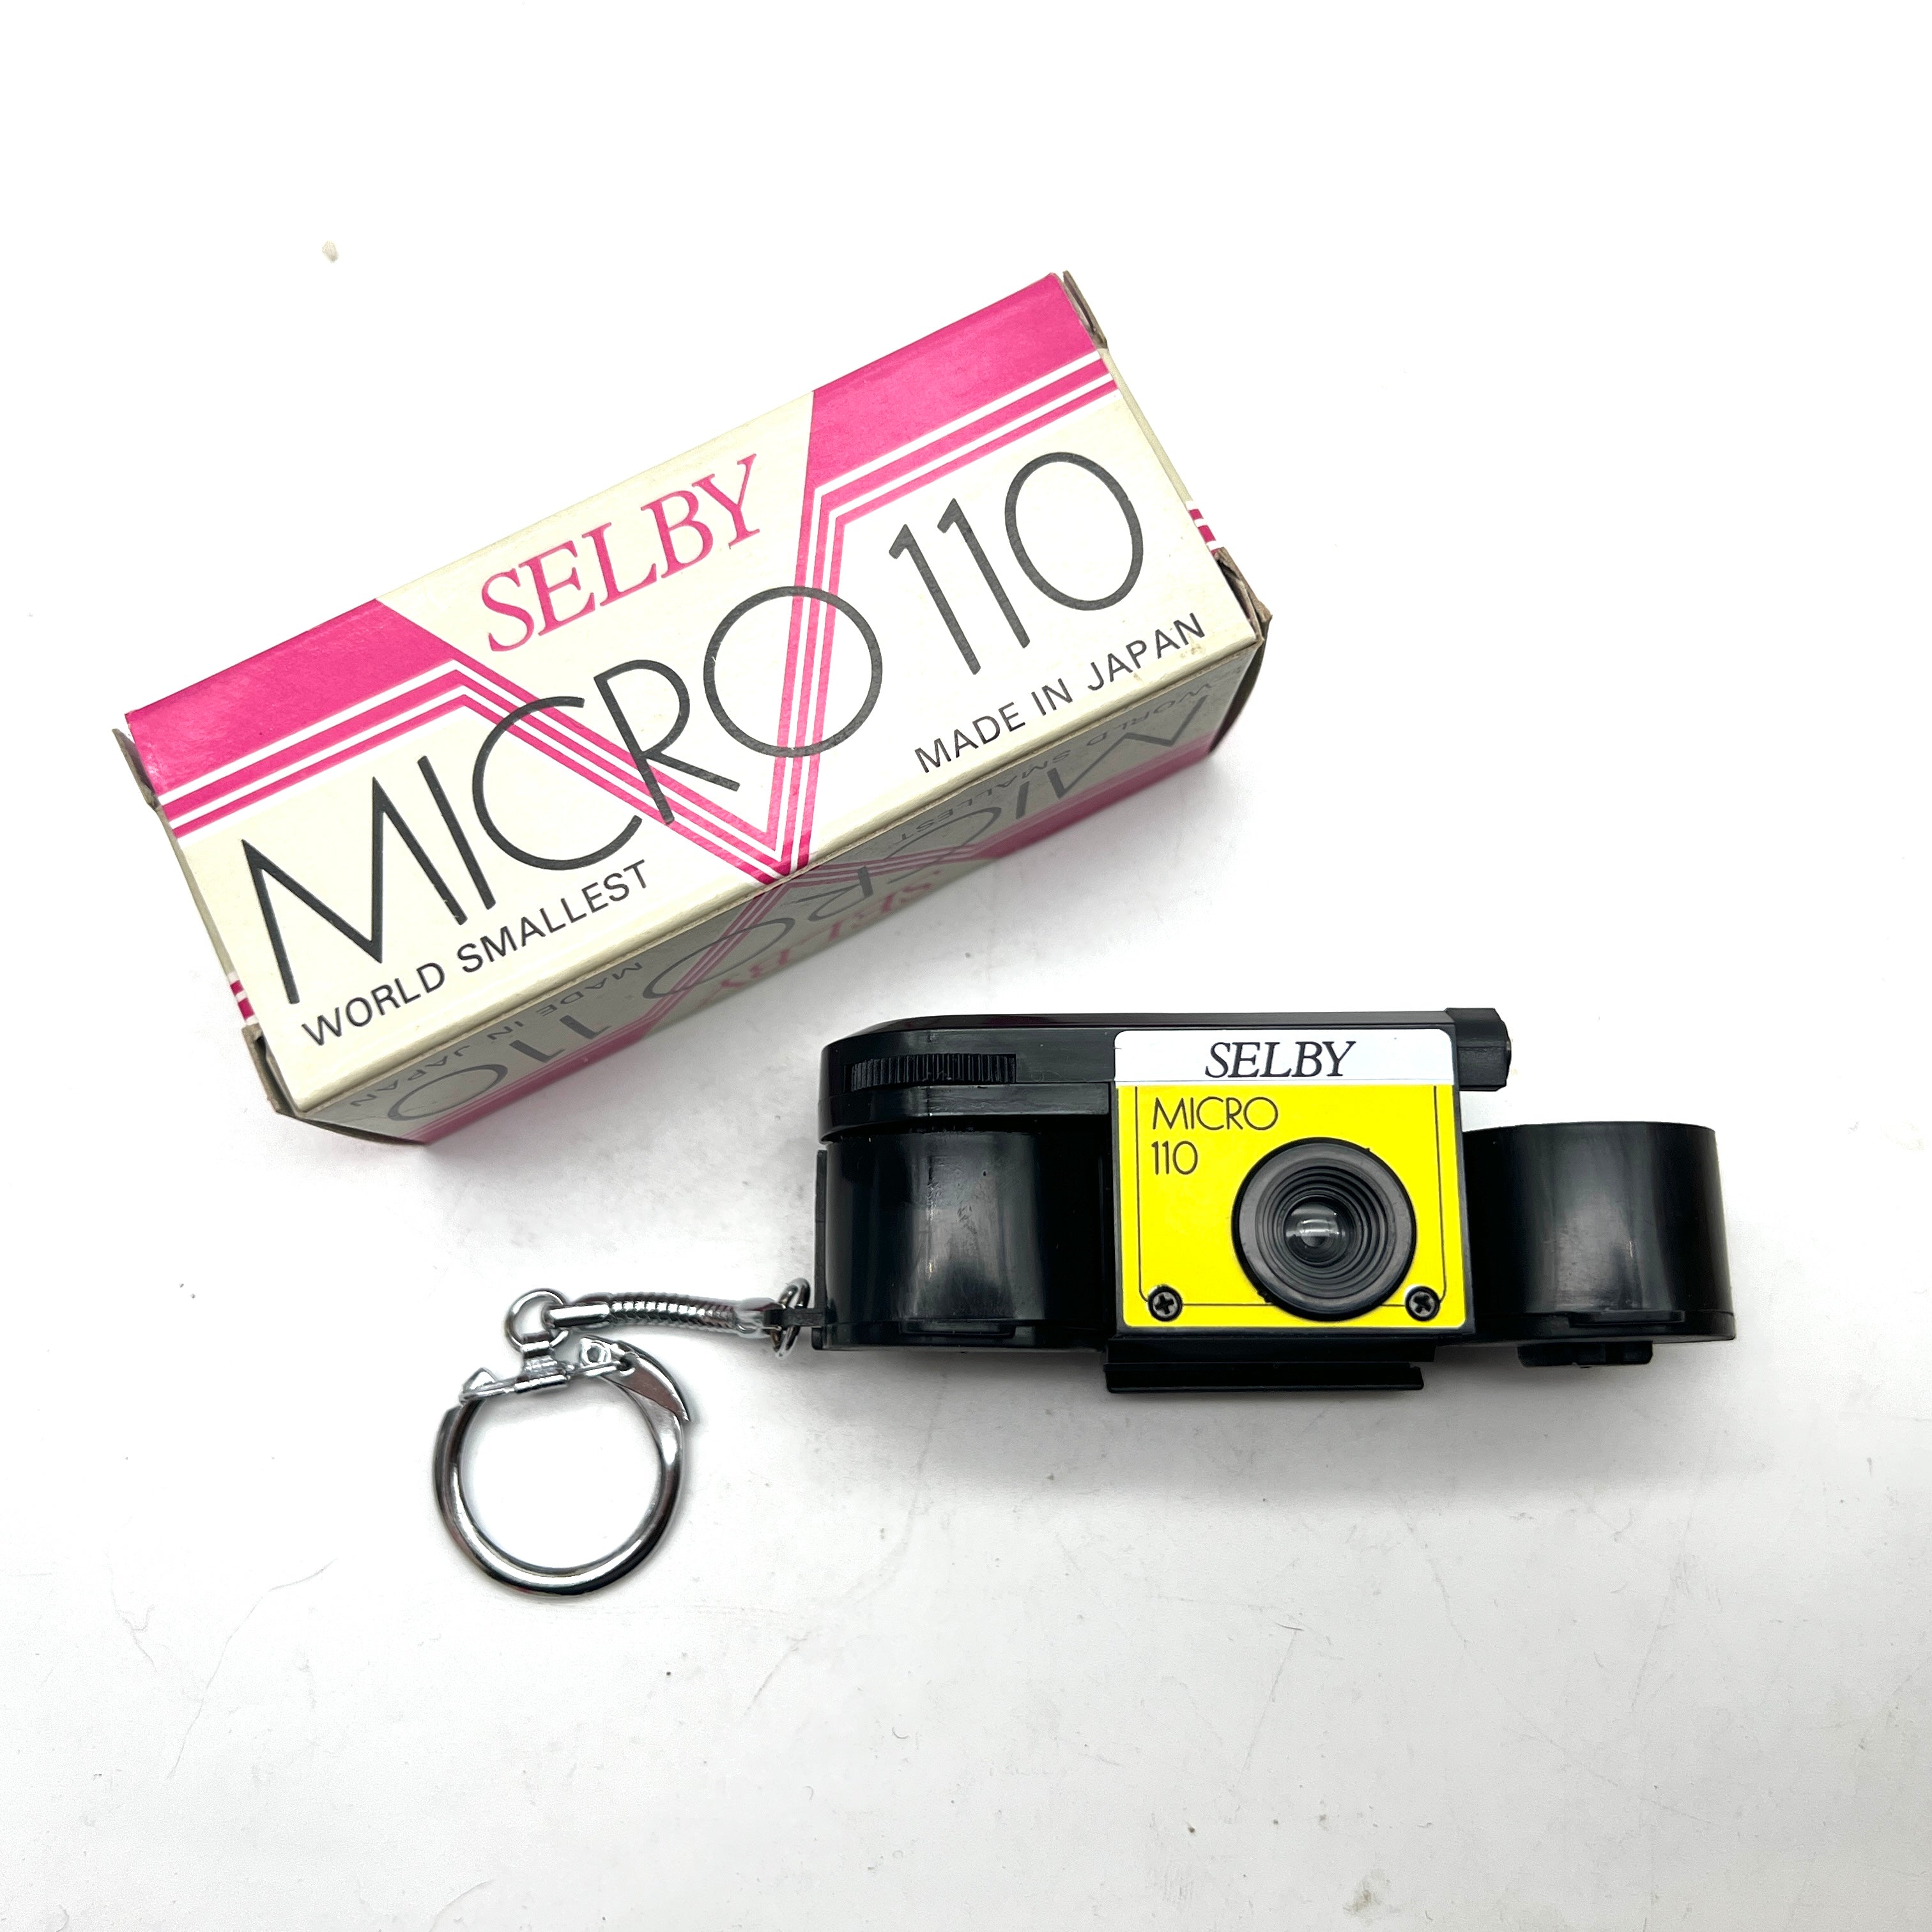 Selby Micro 110 Camera